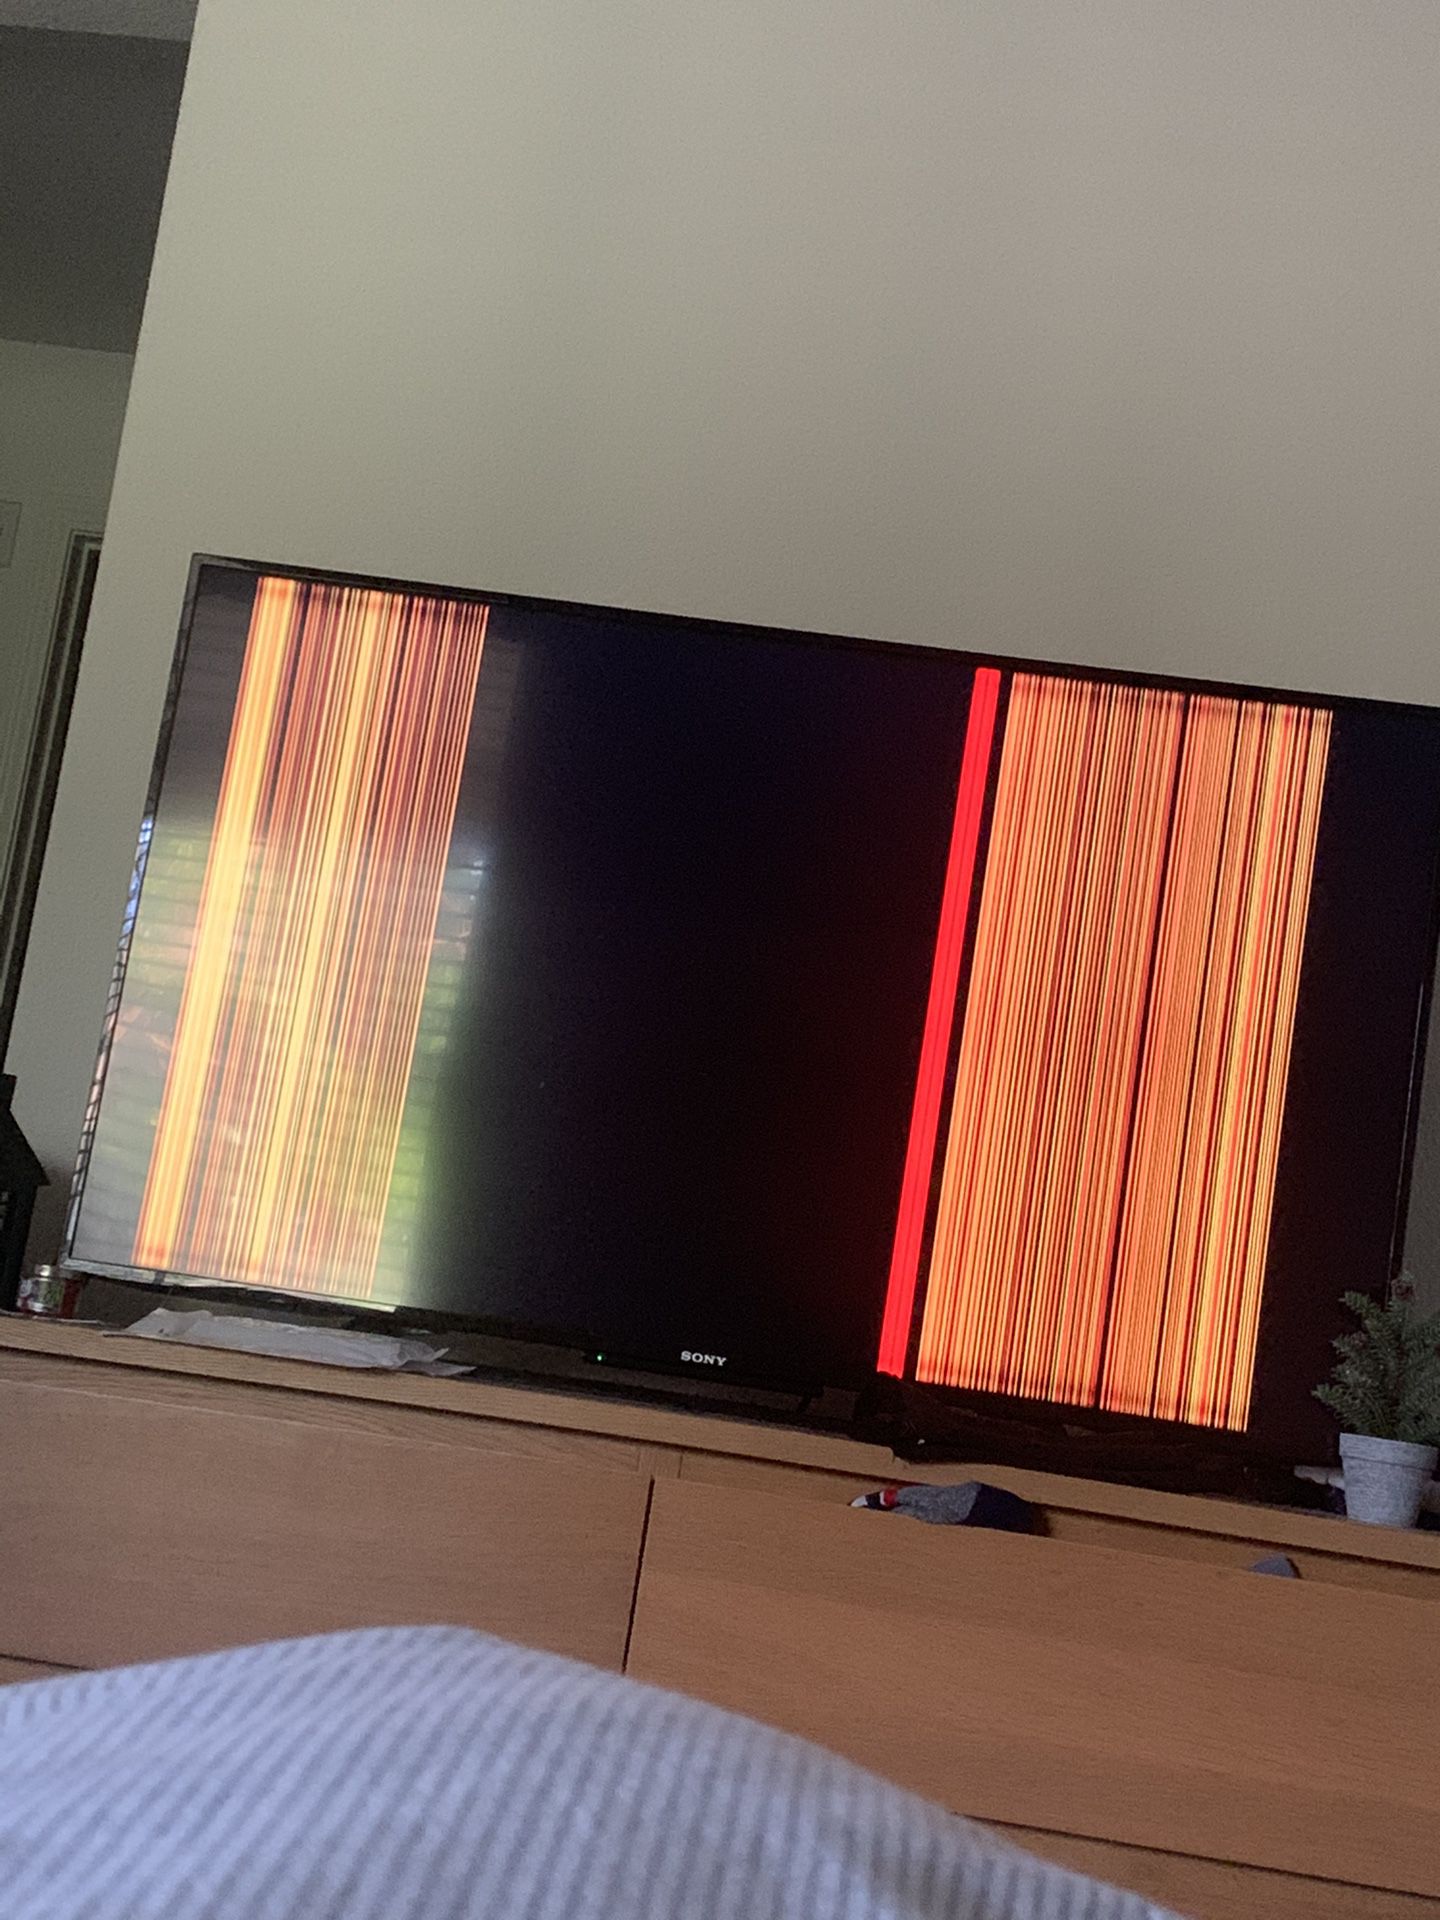 Sony tv 50 inch (broken)